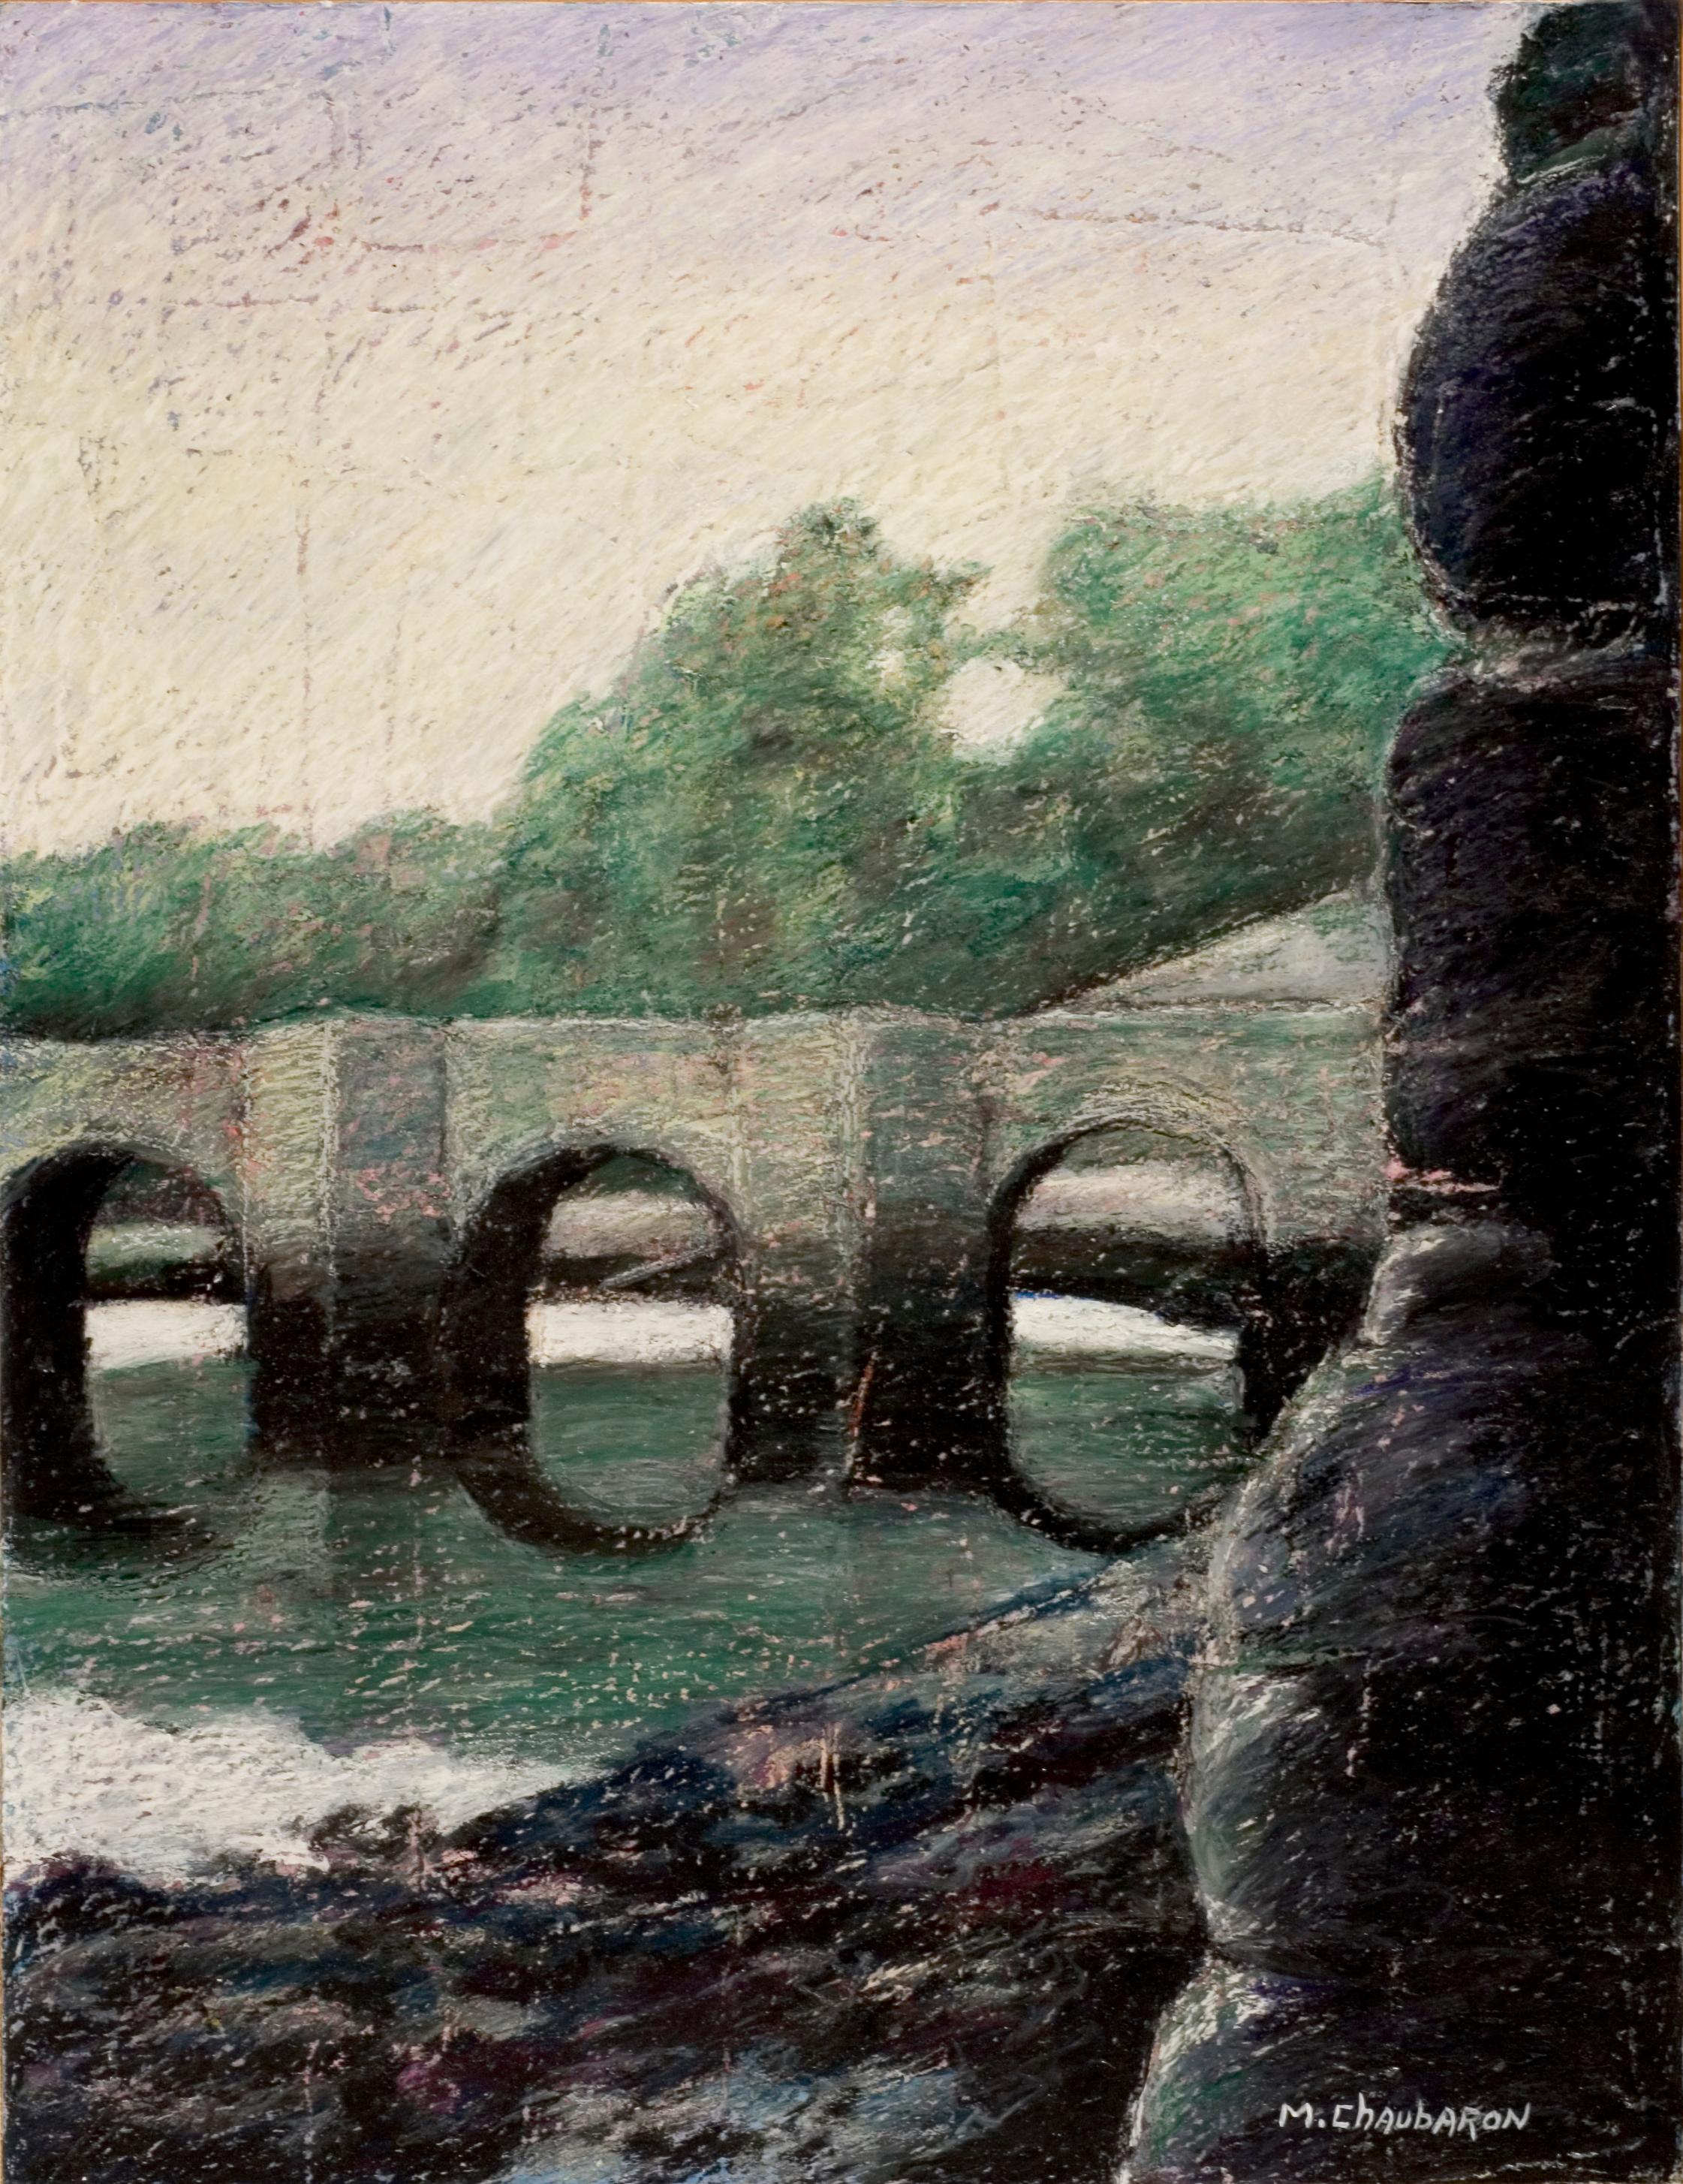 Marc Chaubaron Landscape Painting – Steinbogenbrücke auf dem Fluss an der Dämmerung oder am Morgen mit grünen Bäumen, Ölpastell